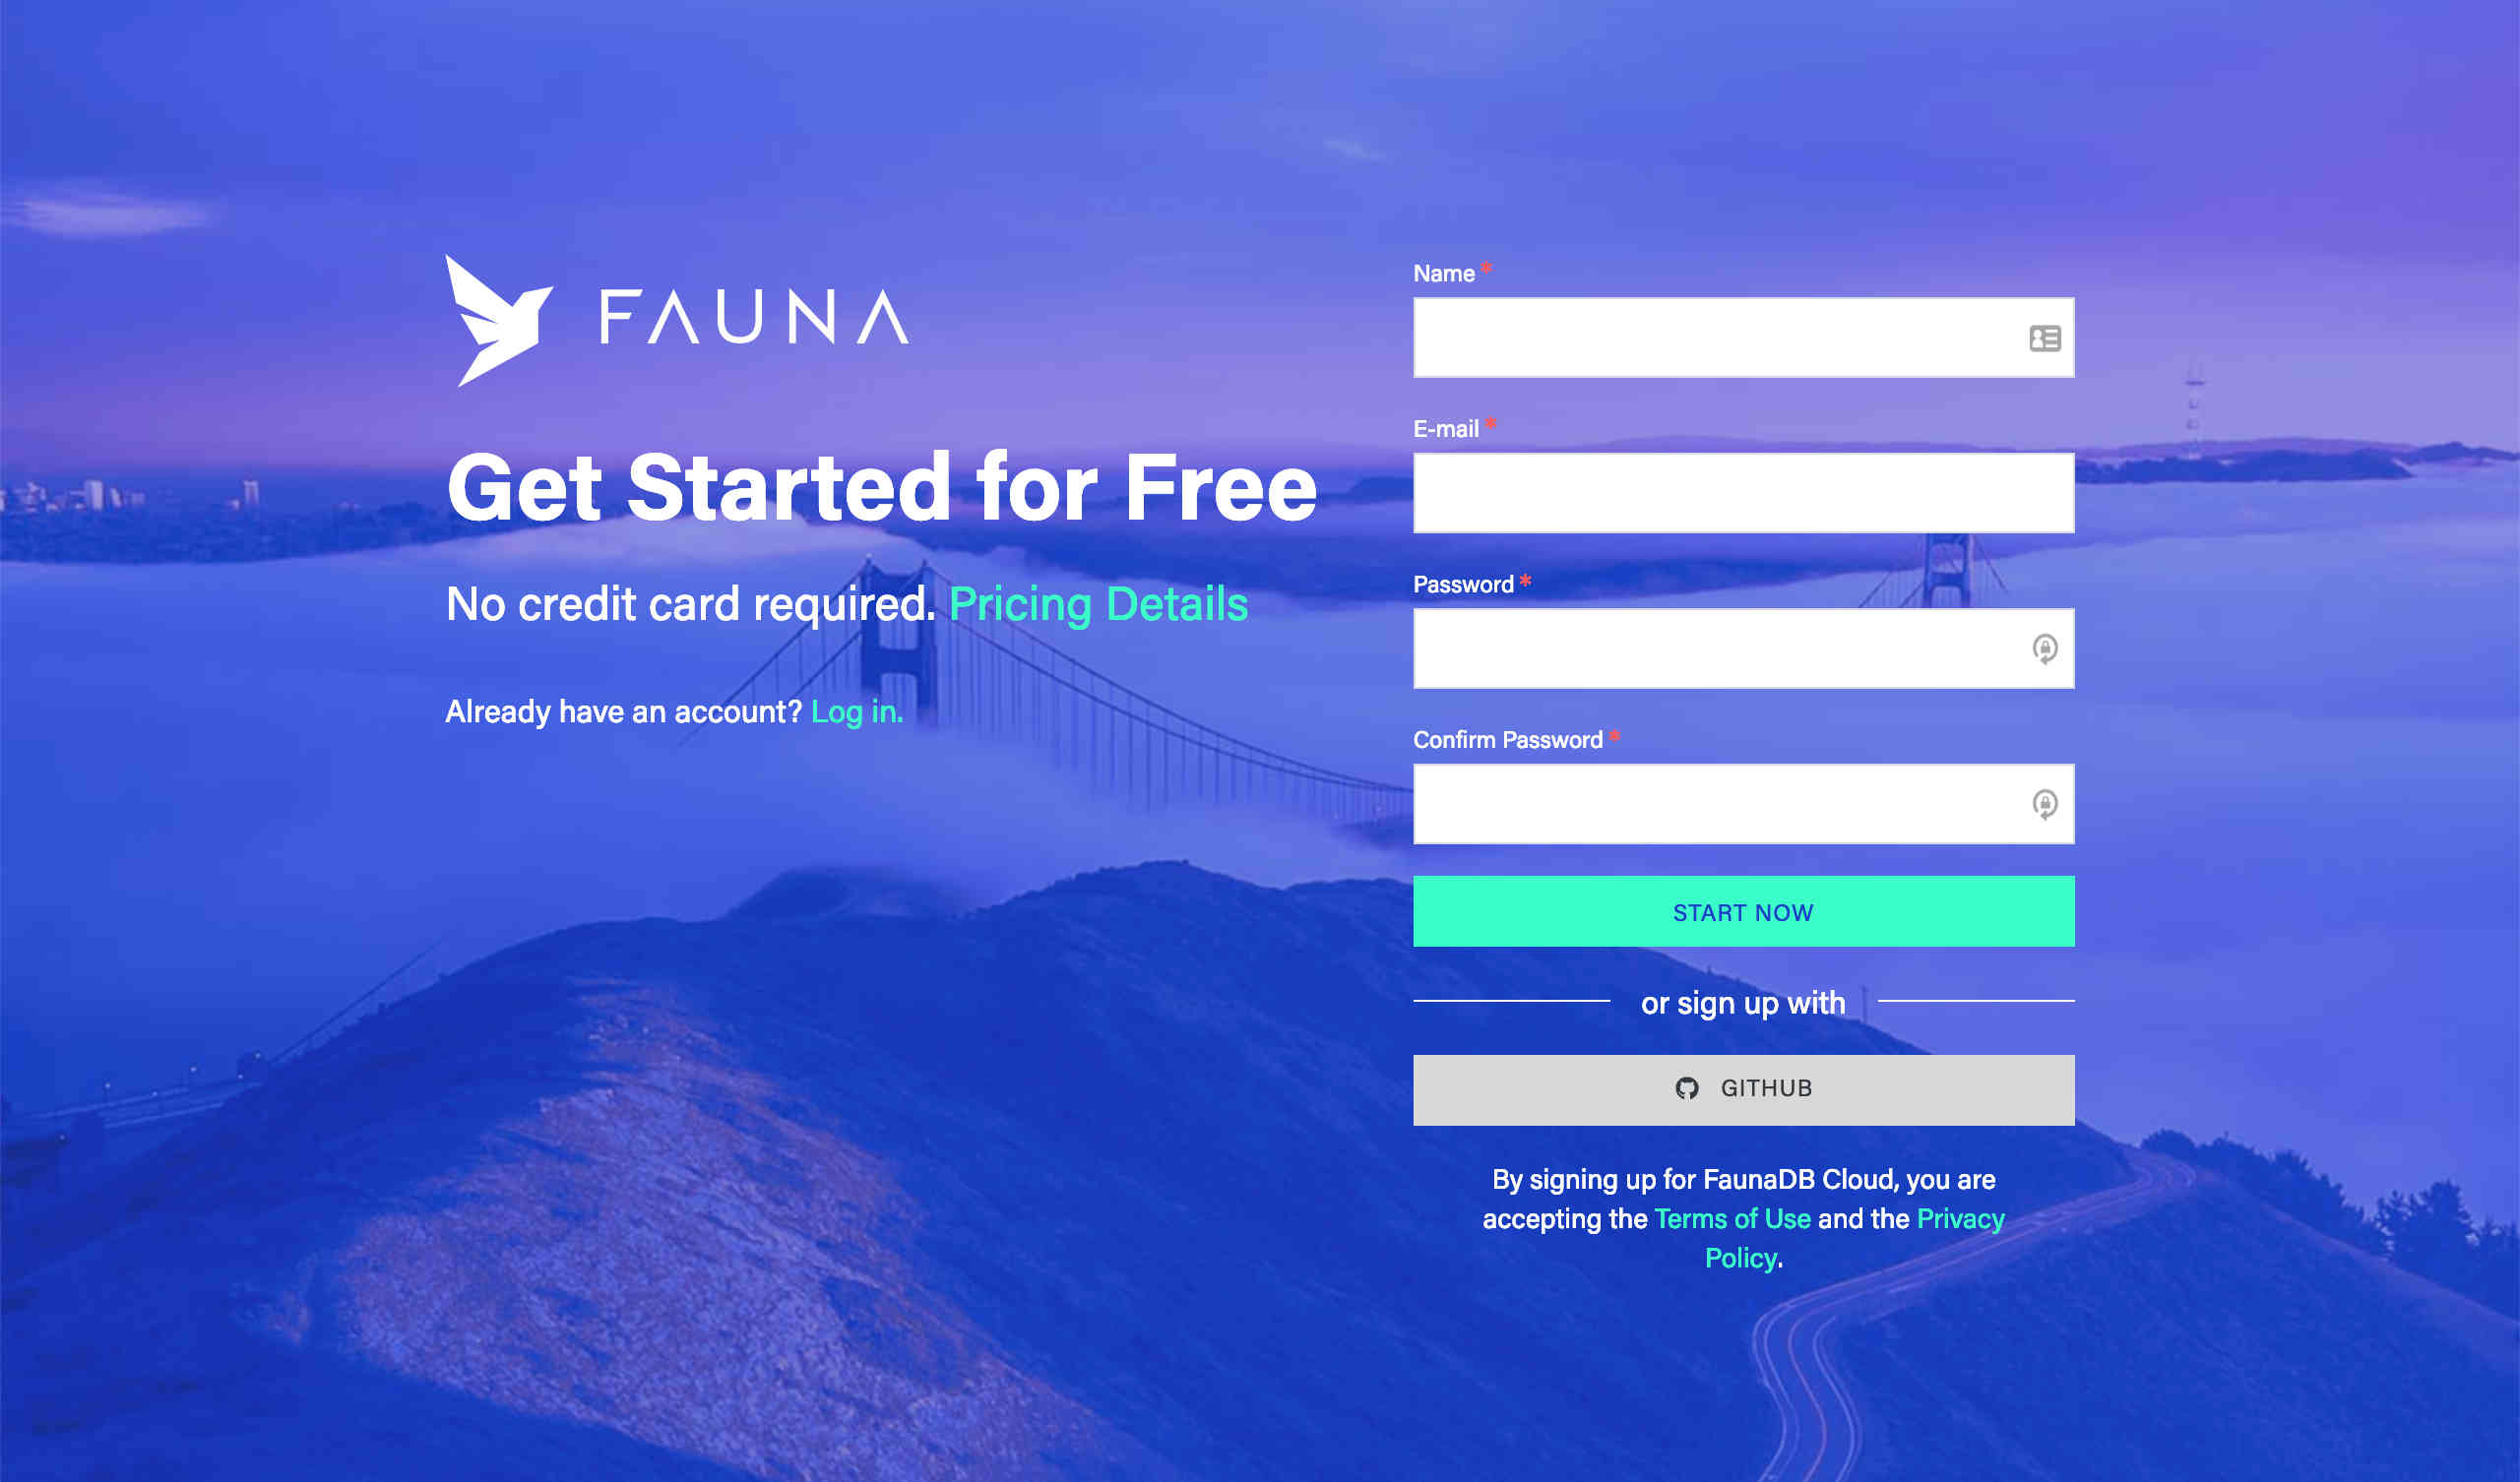 The FaunaDB sign up screen